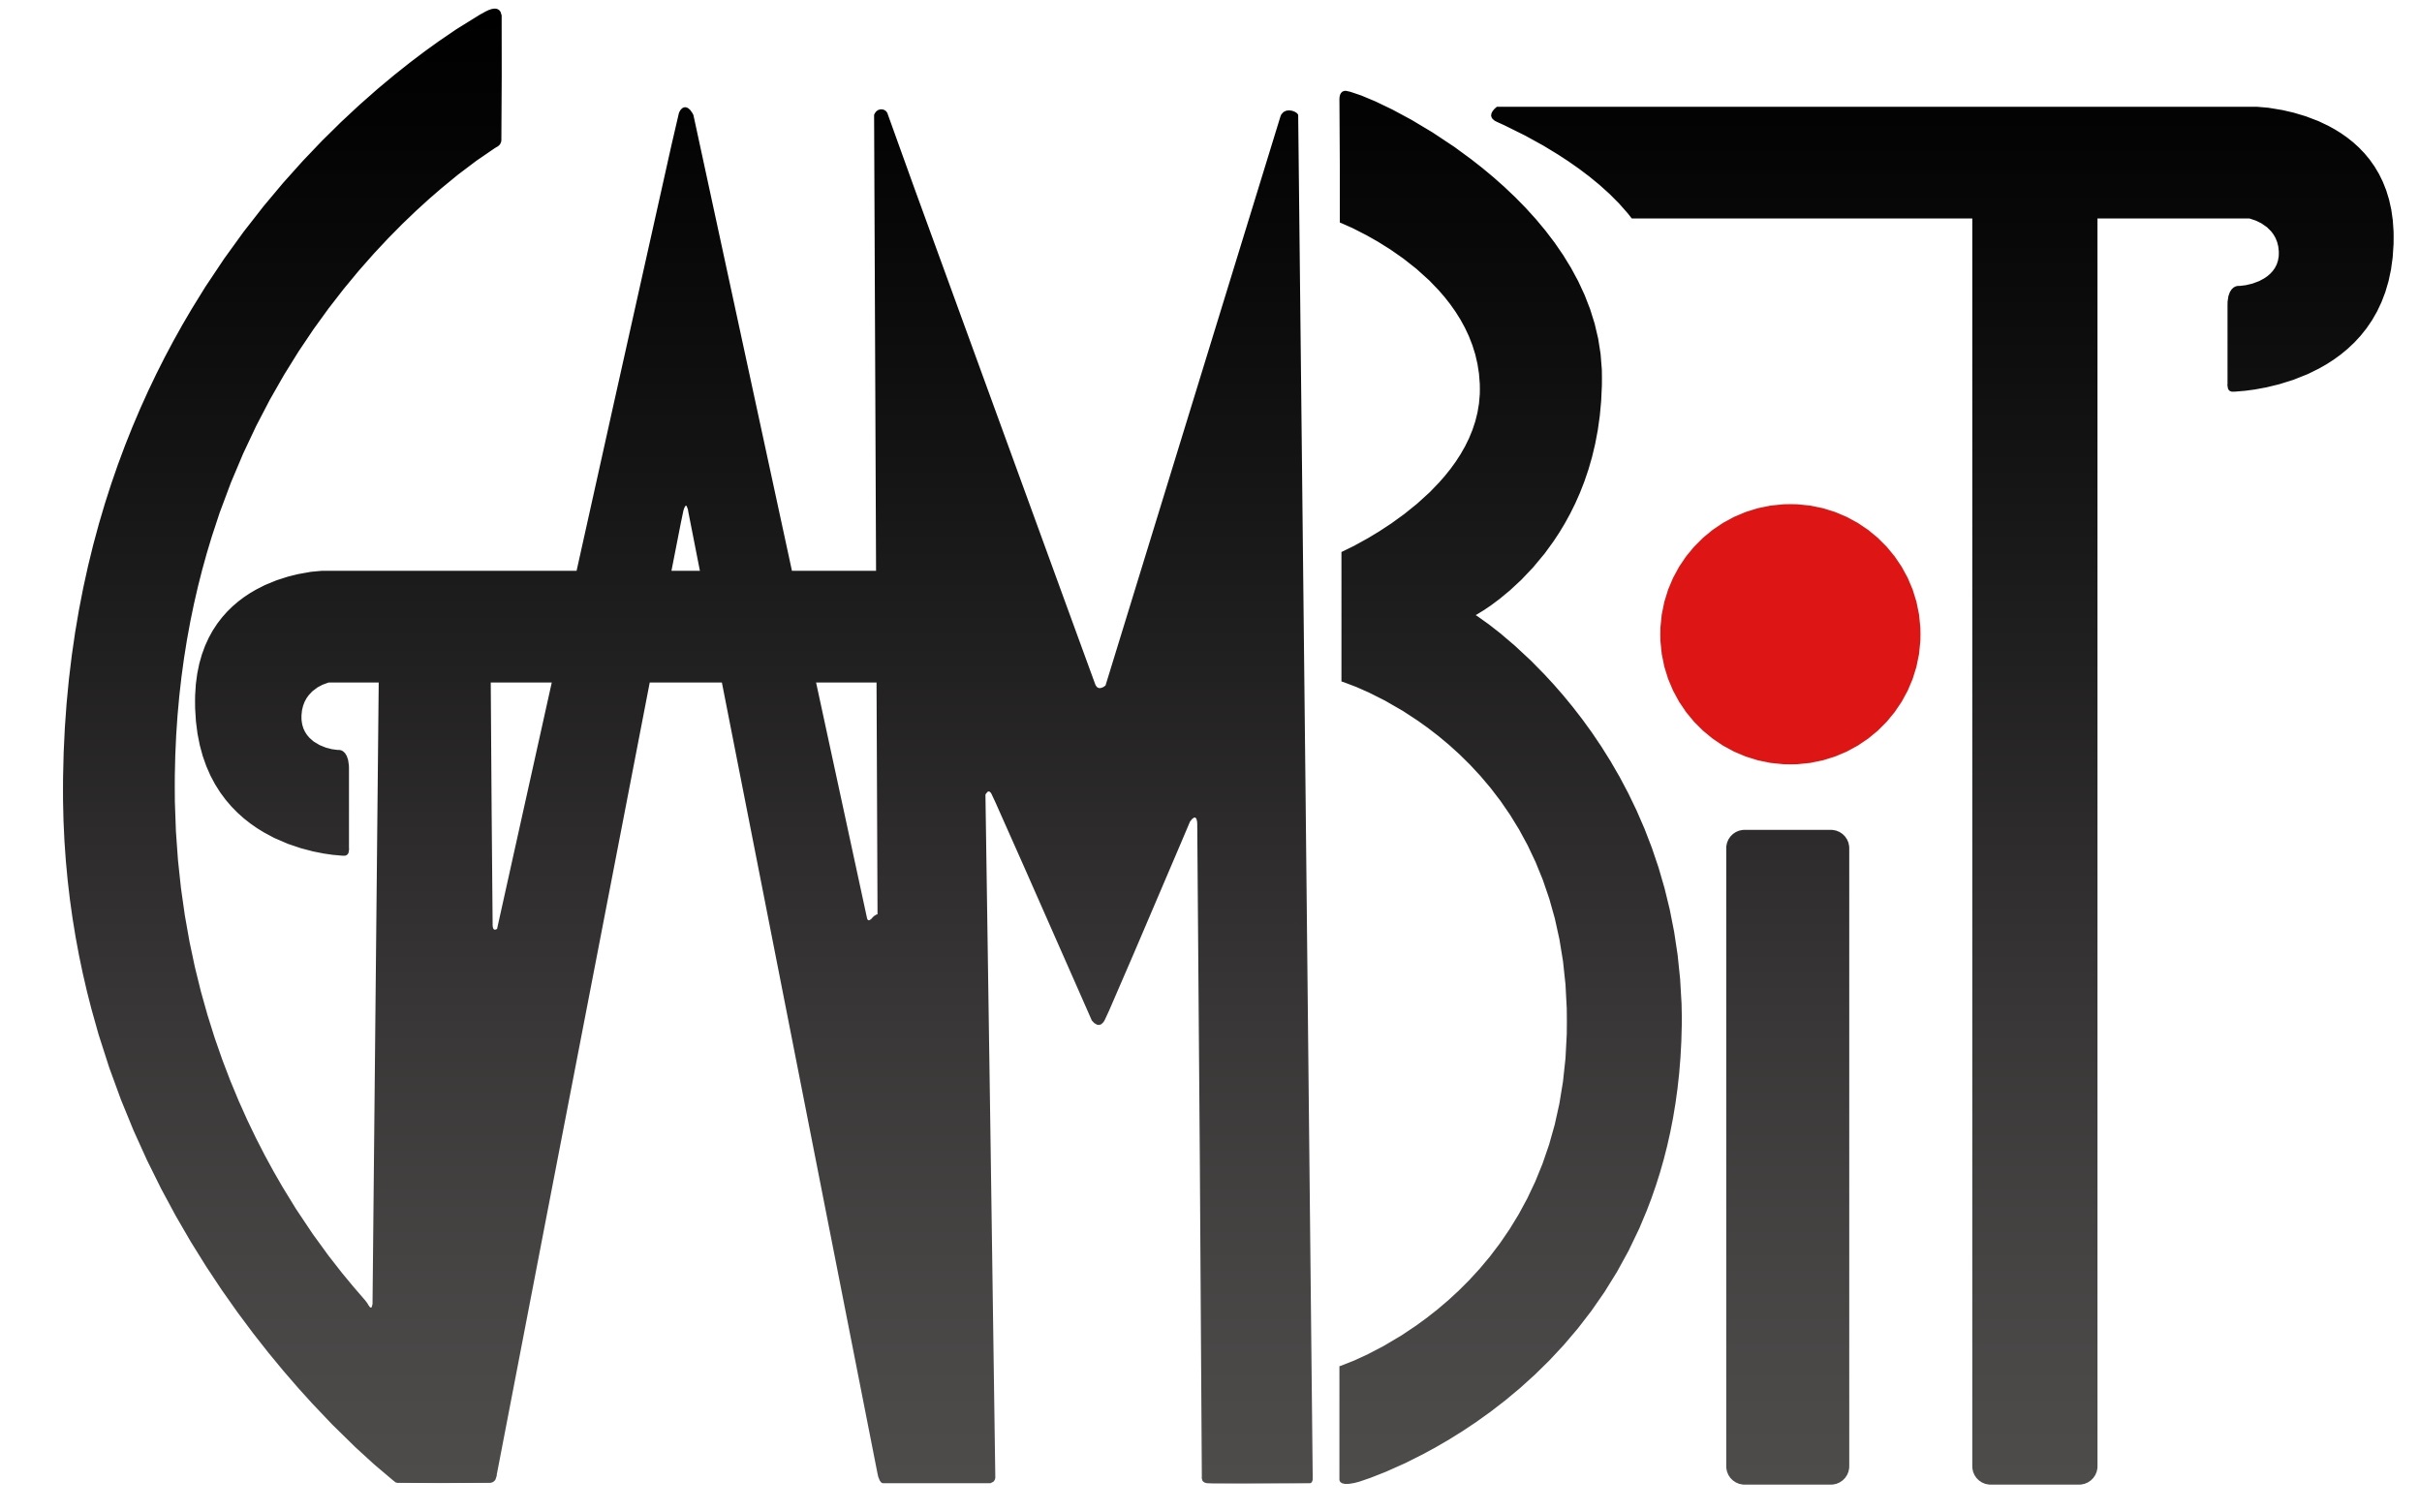 GAMBIT Logo.jpg 025adad5a5c95c6eb7a250b048d40d34